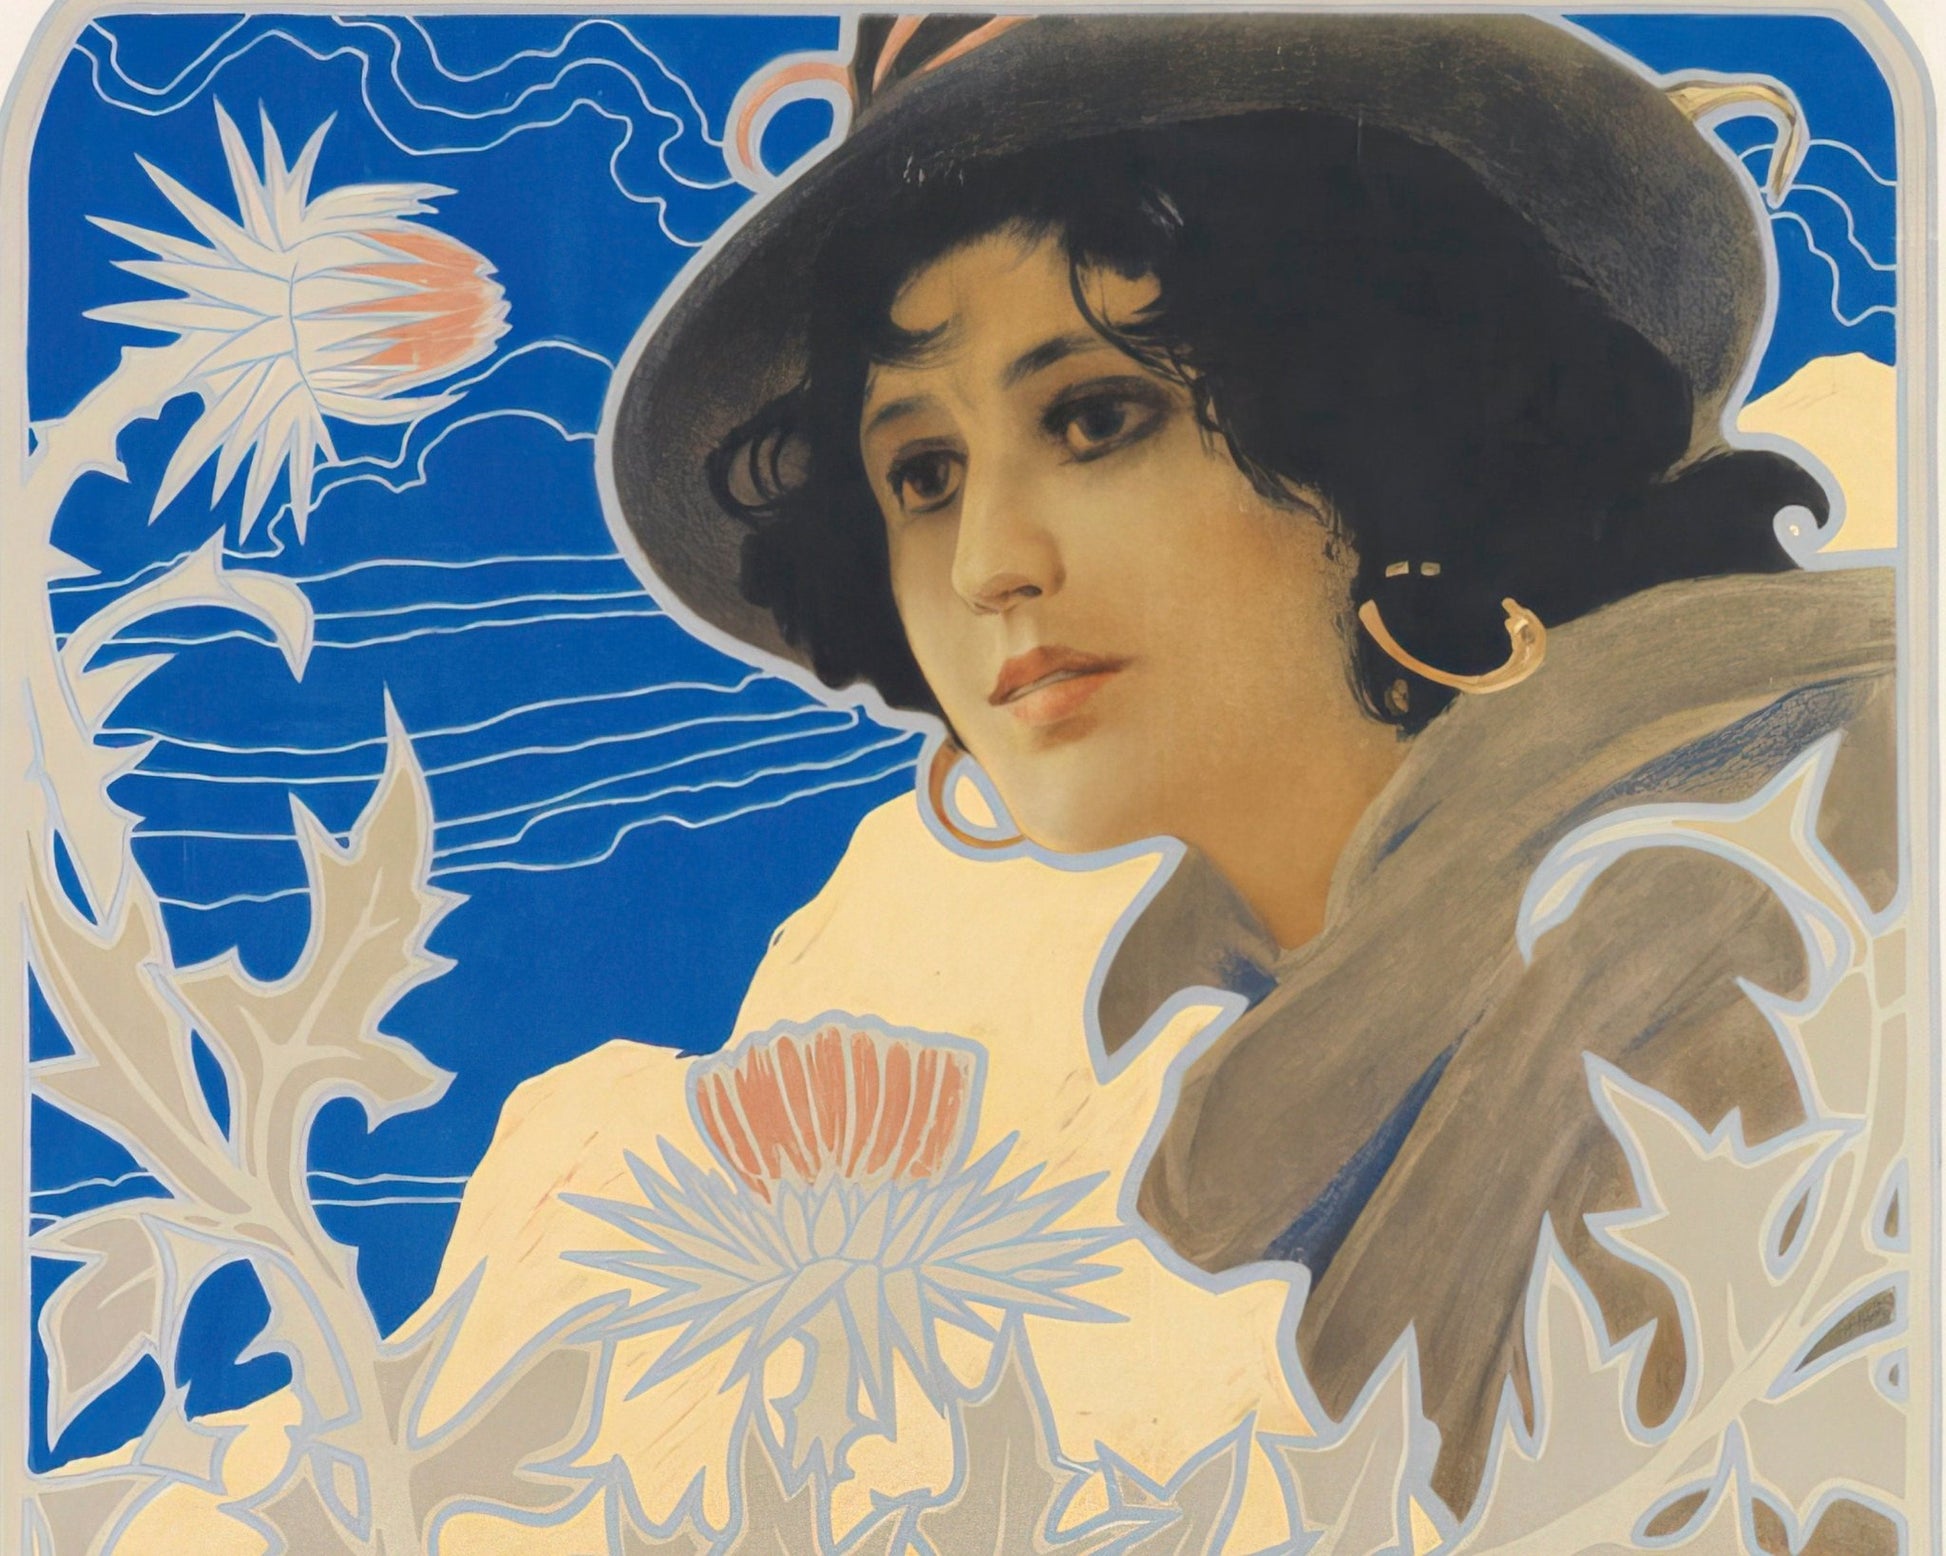 Vintage Sheet Music Cover "Lorenza Libretto" (c.1899) - Mabon Gallery